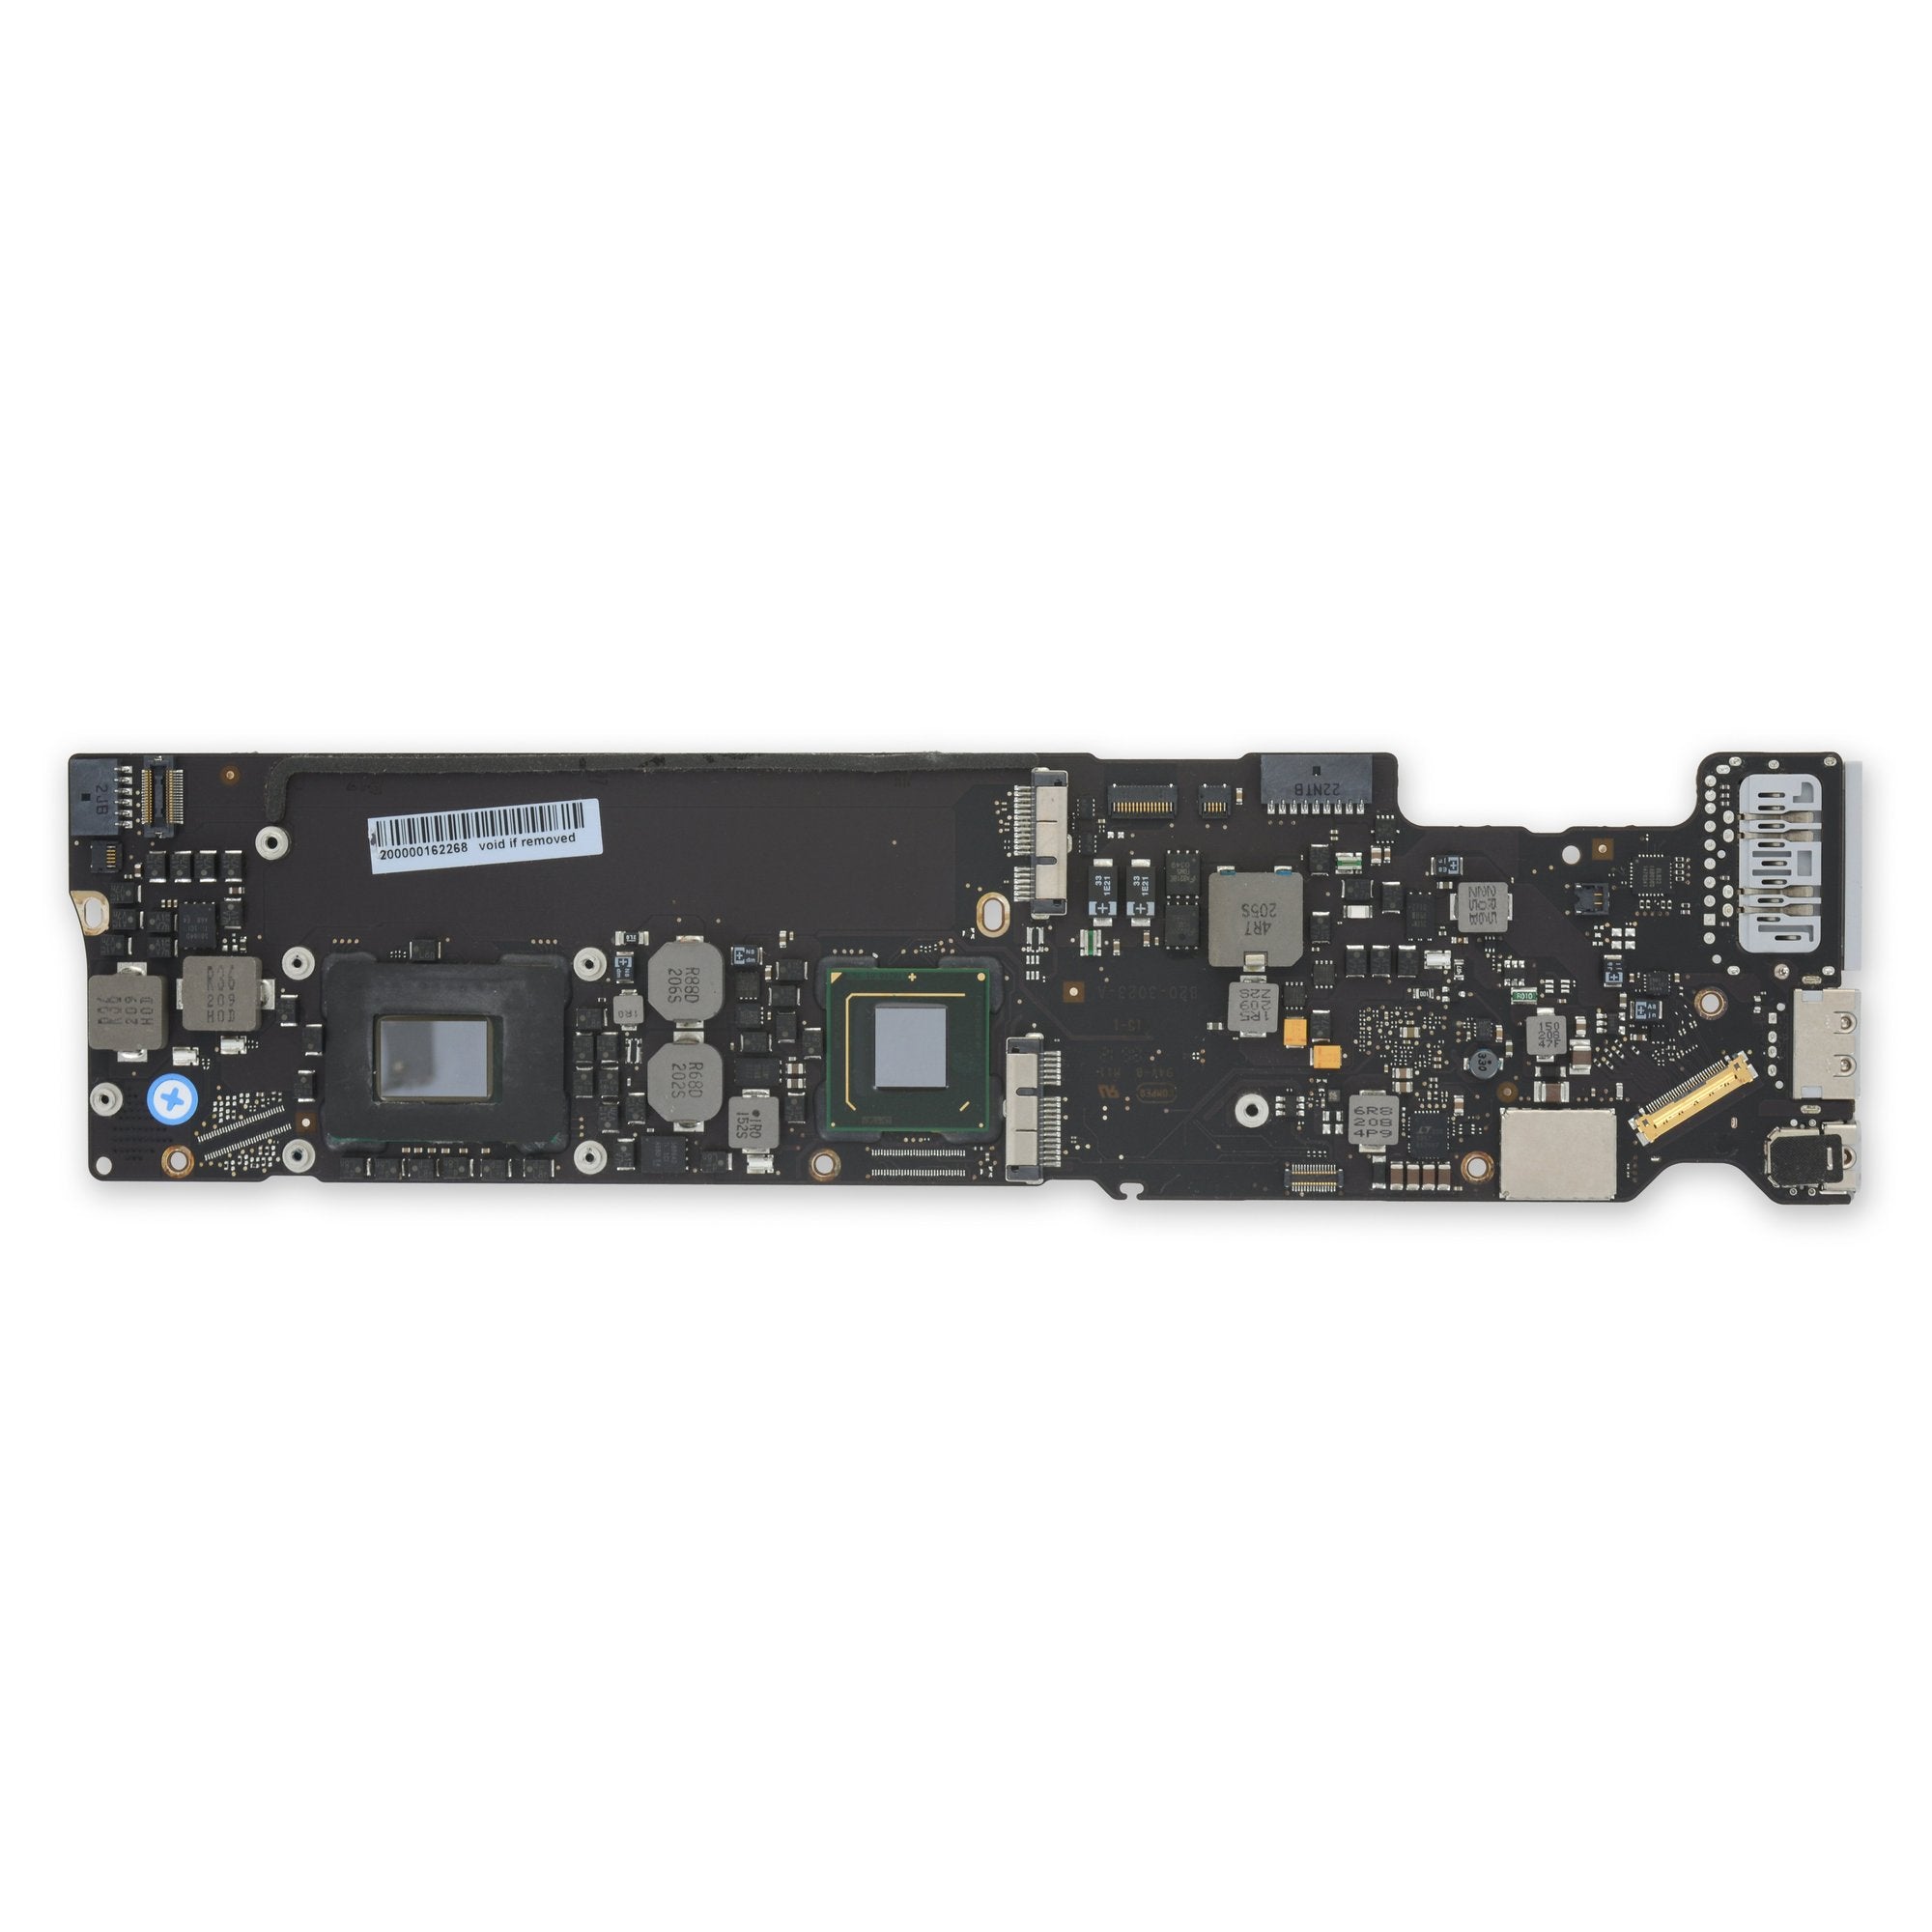 MacBook Air 13" (Mid 2011) 1.8 GHz Logic Board Used